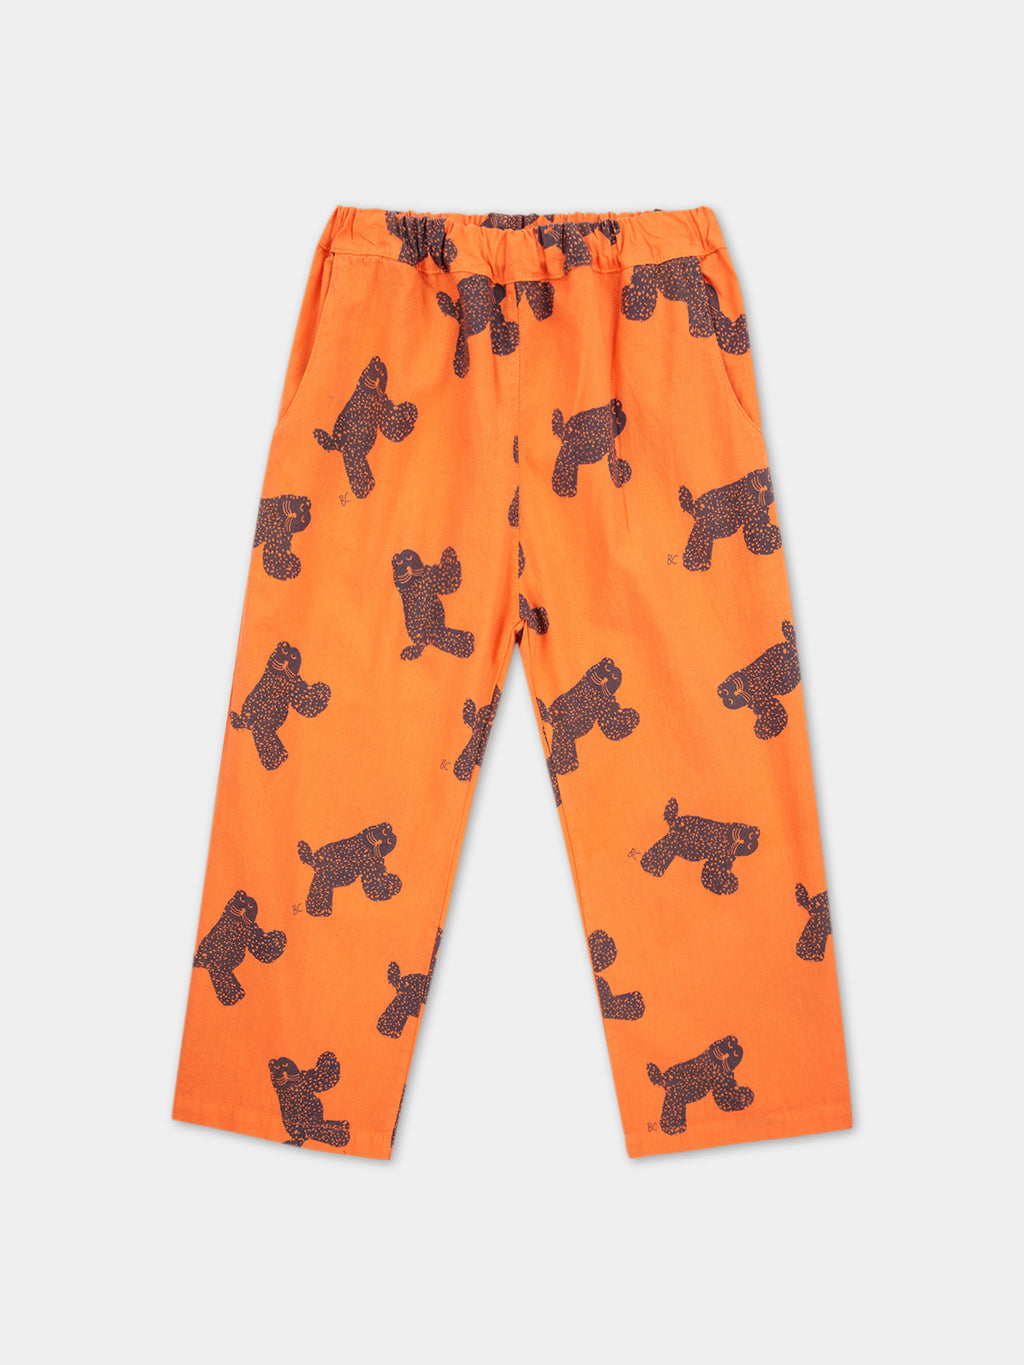 Pantaloni arancioni per bambini con fantasia ghepardi all-over